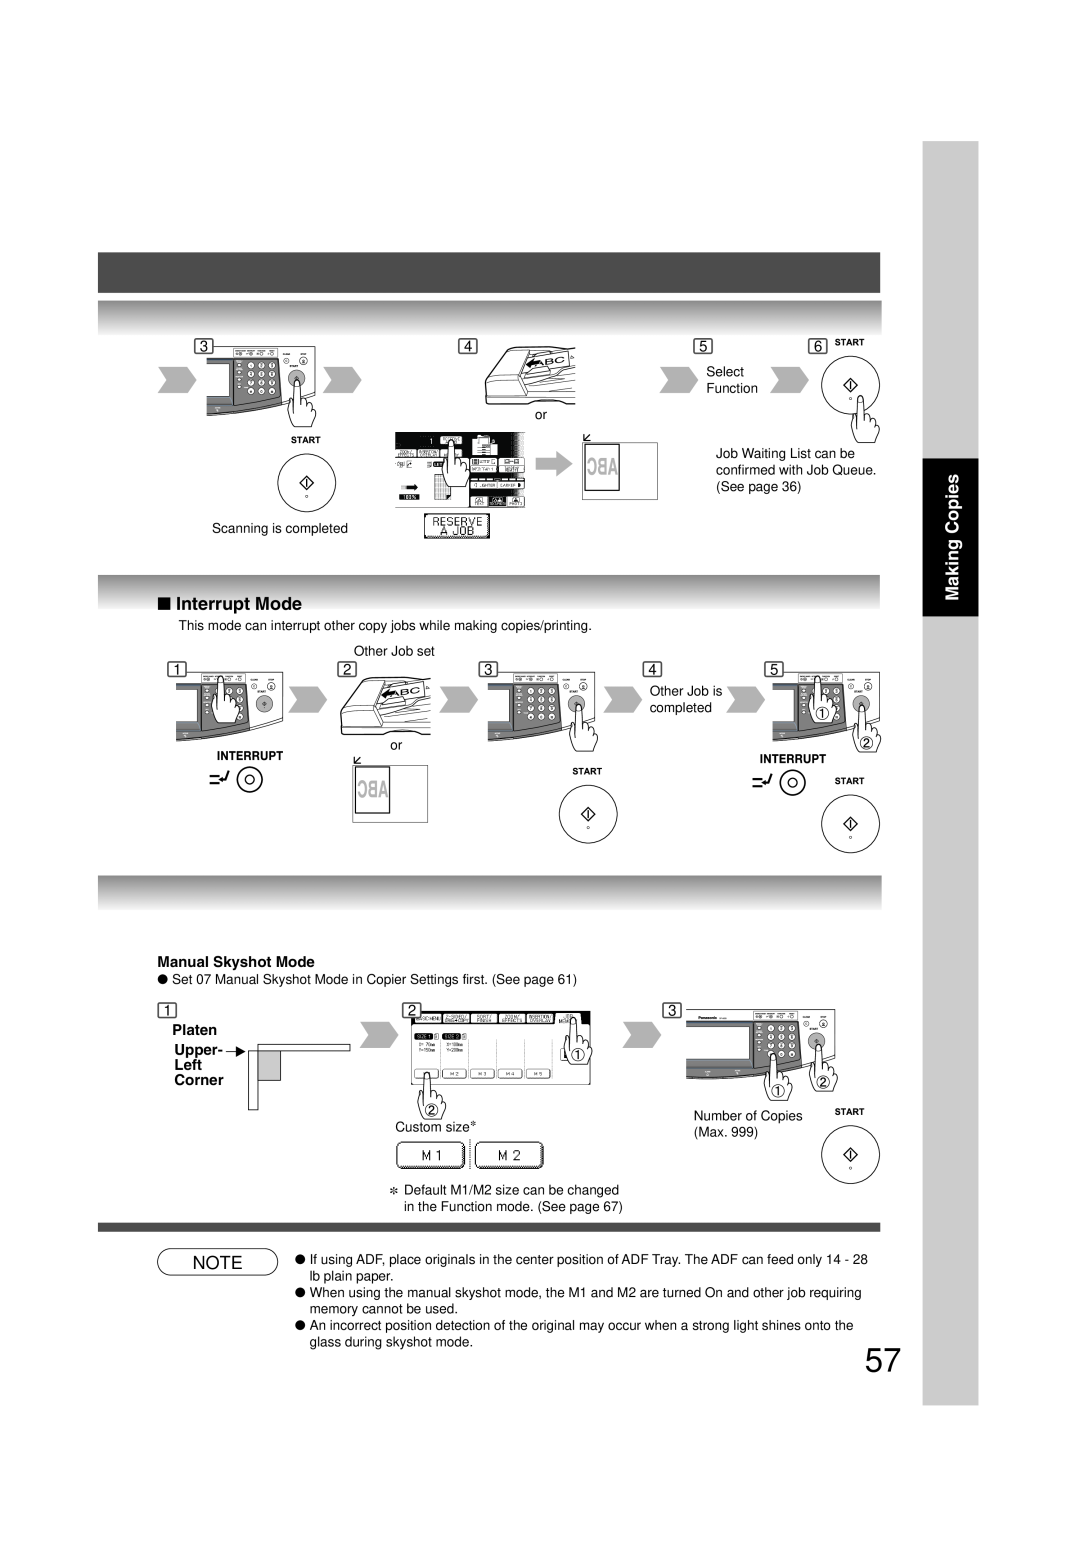 Panasonic 6020, 4520 manual Interrupt Mode, Making Copies, Manual Skyshot Mode, Platen Upper Left Corner 